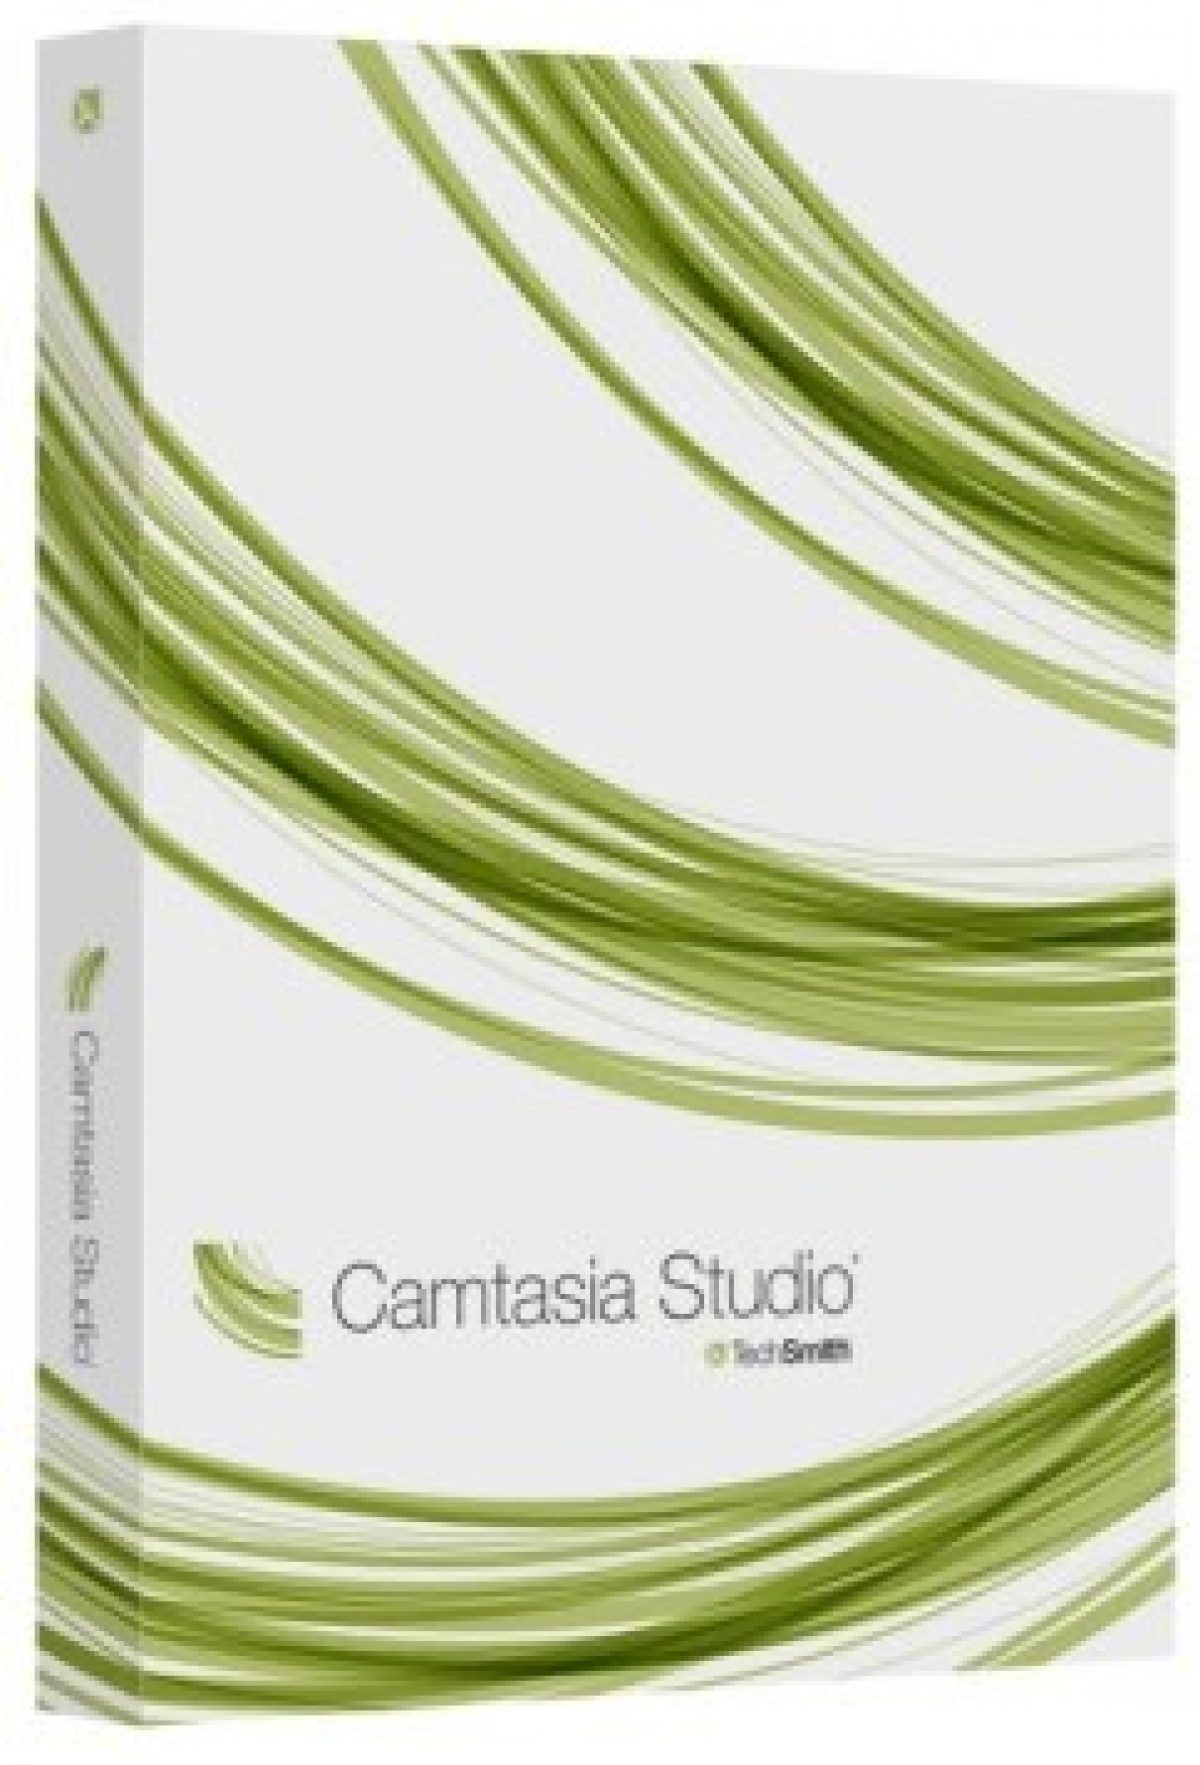 camtasia studio 8 free download full version windows 7